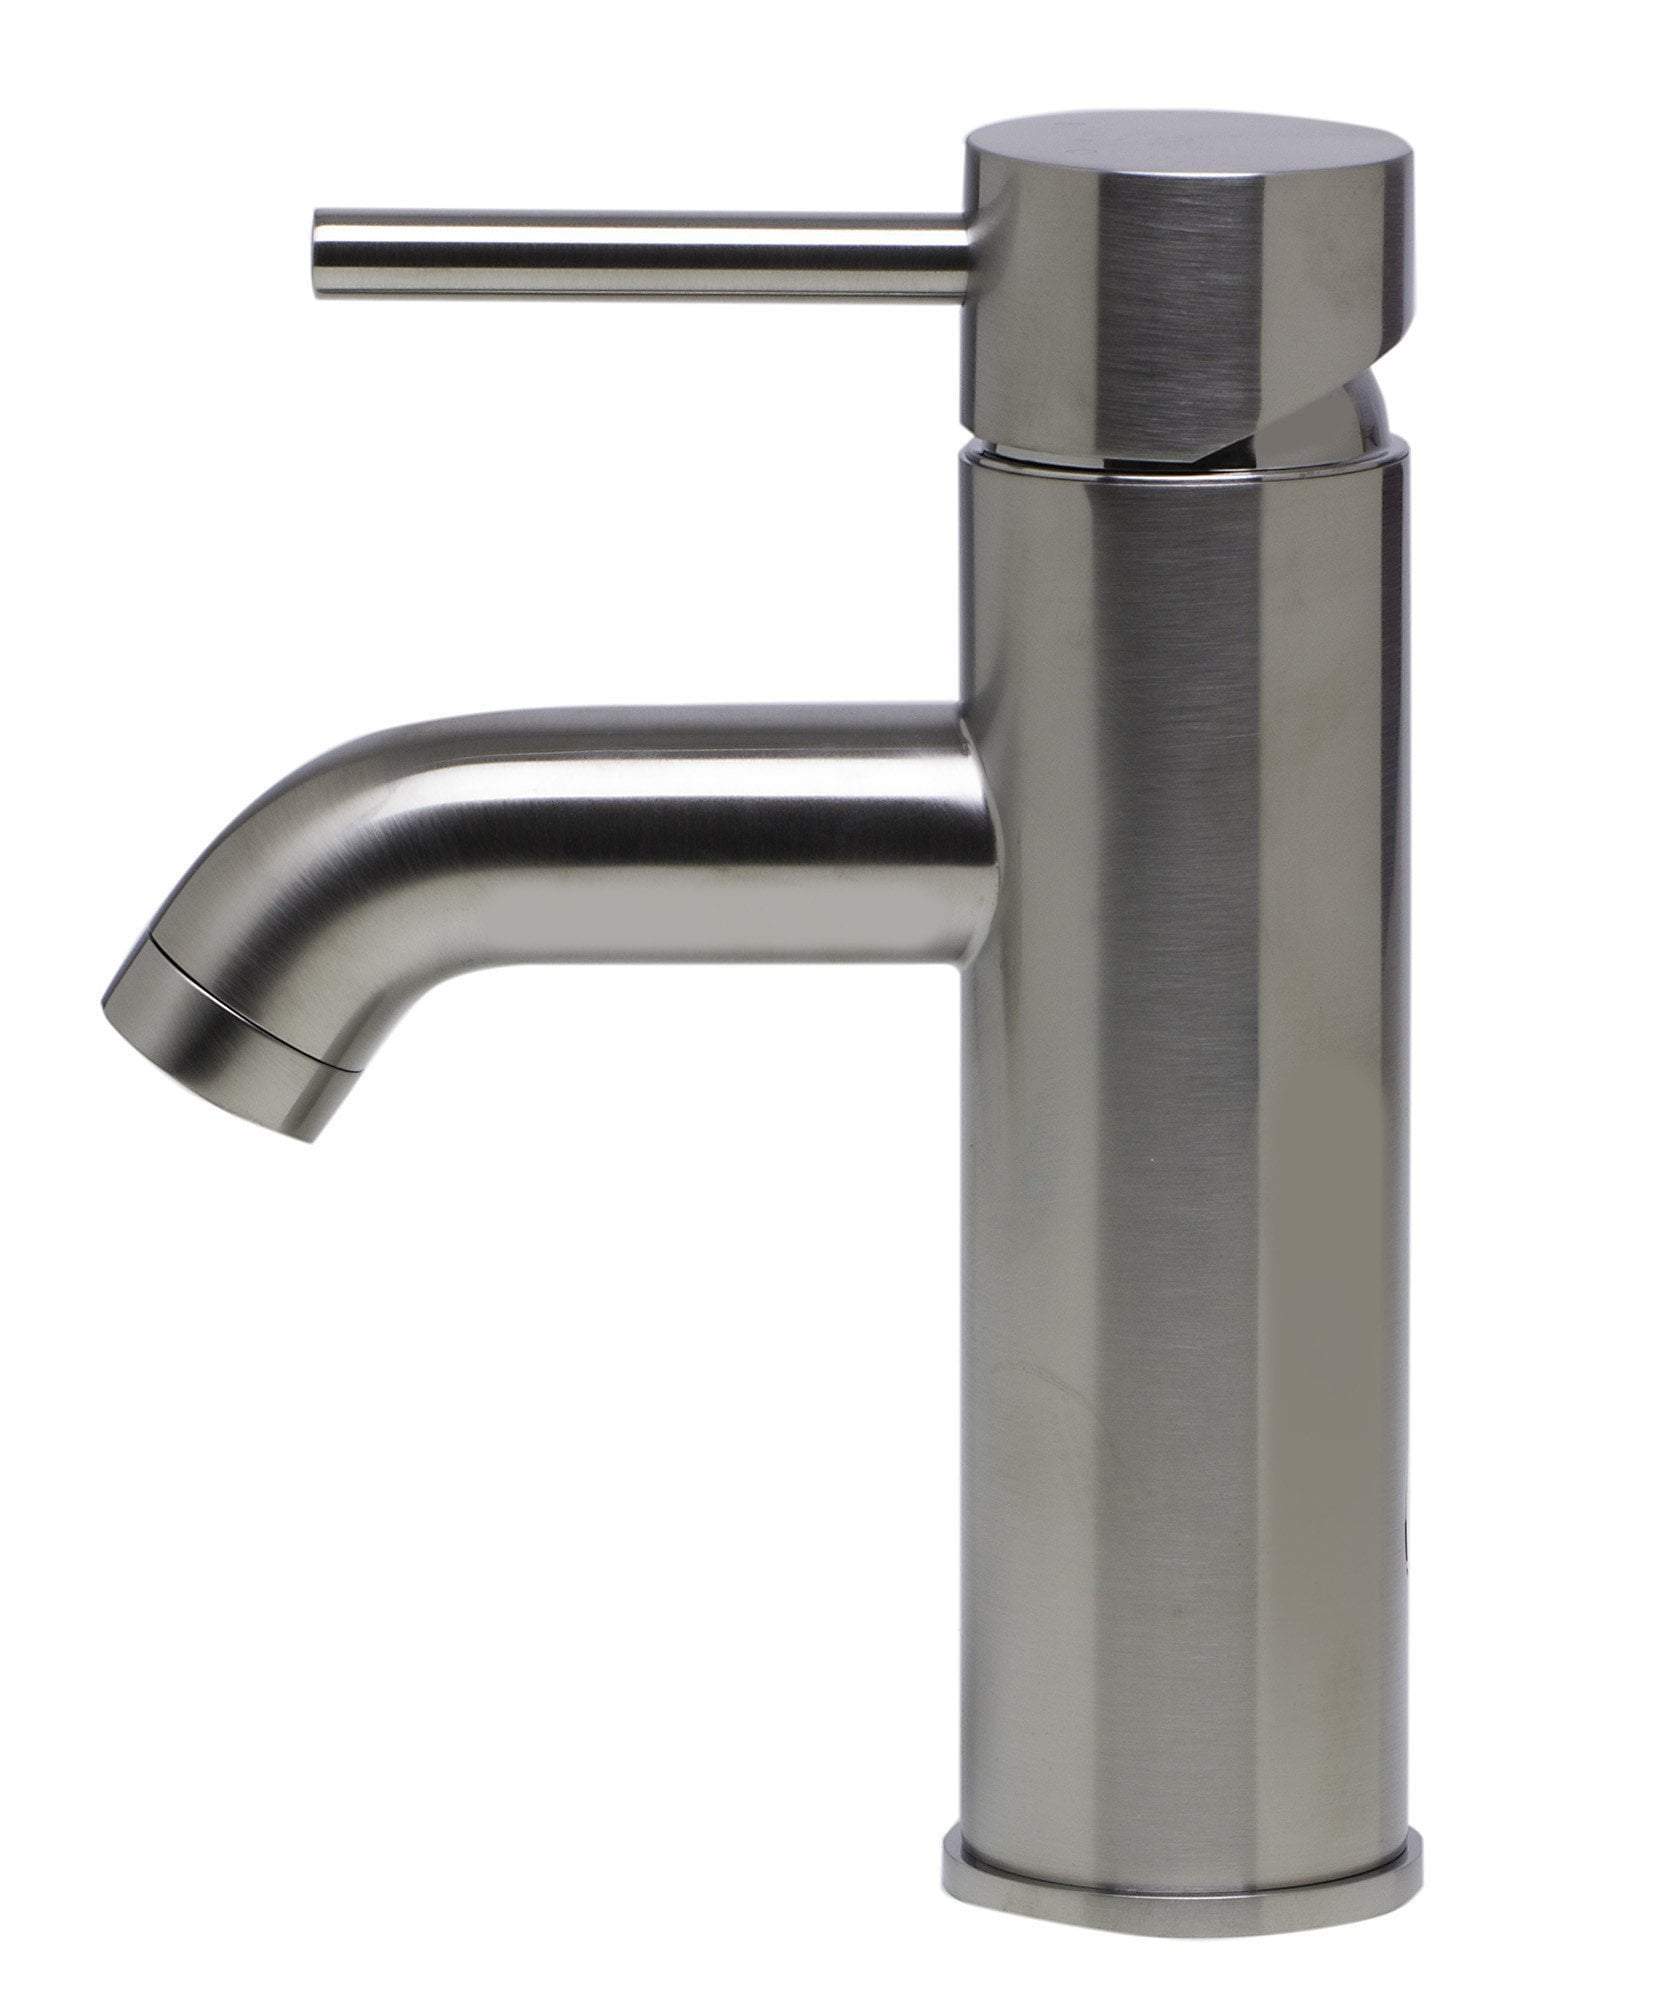 alfi brushed nickel single lever bathroom faucet ab1433 bn